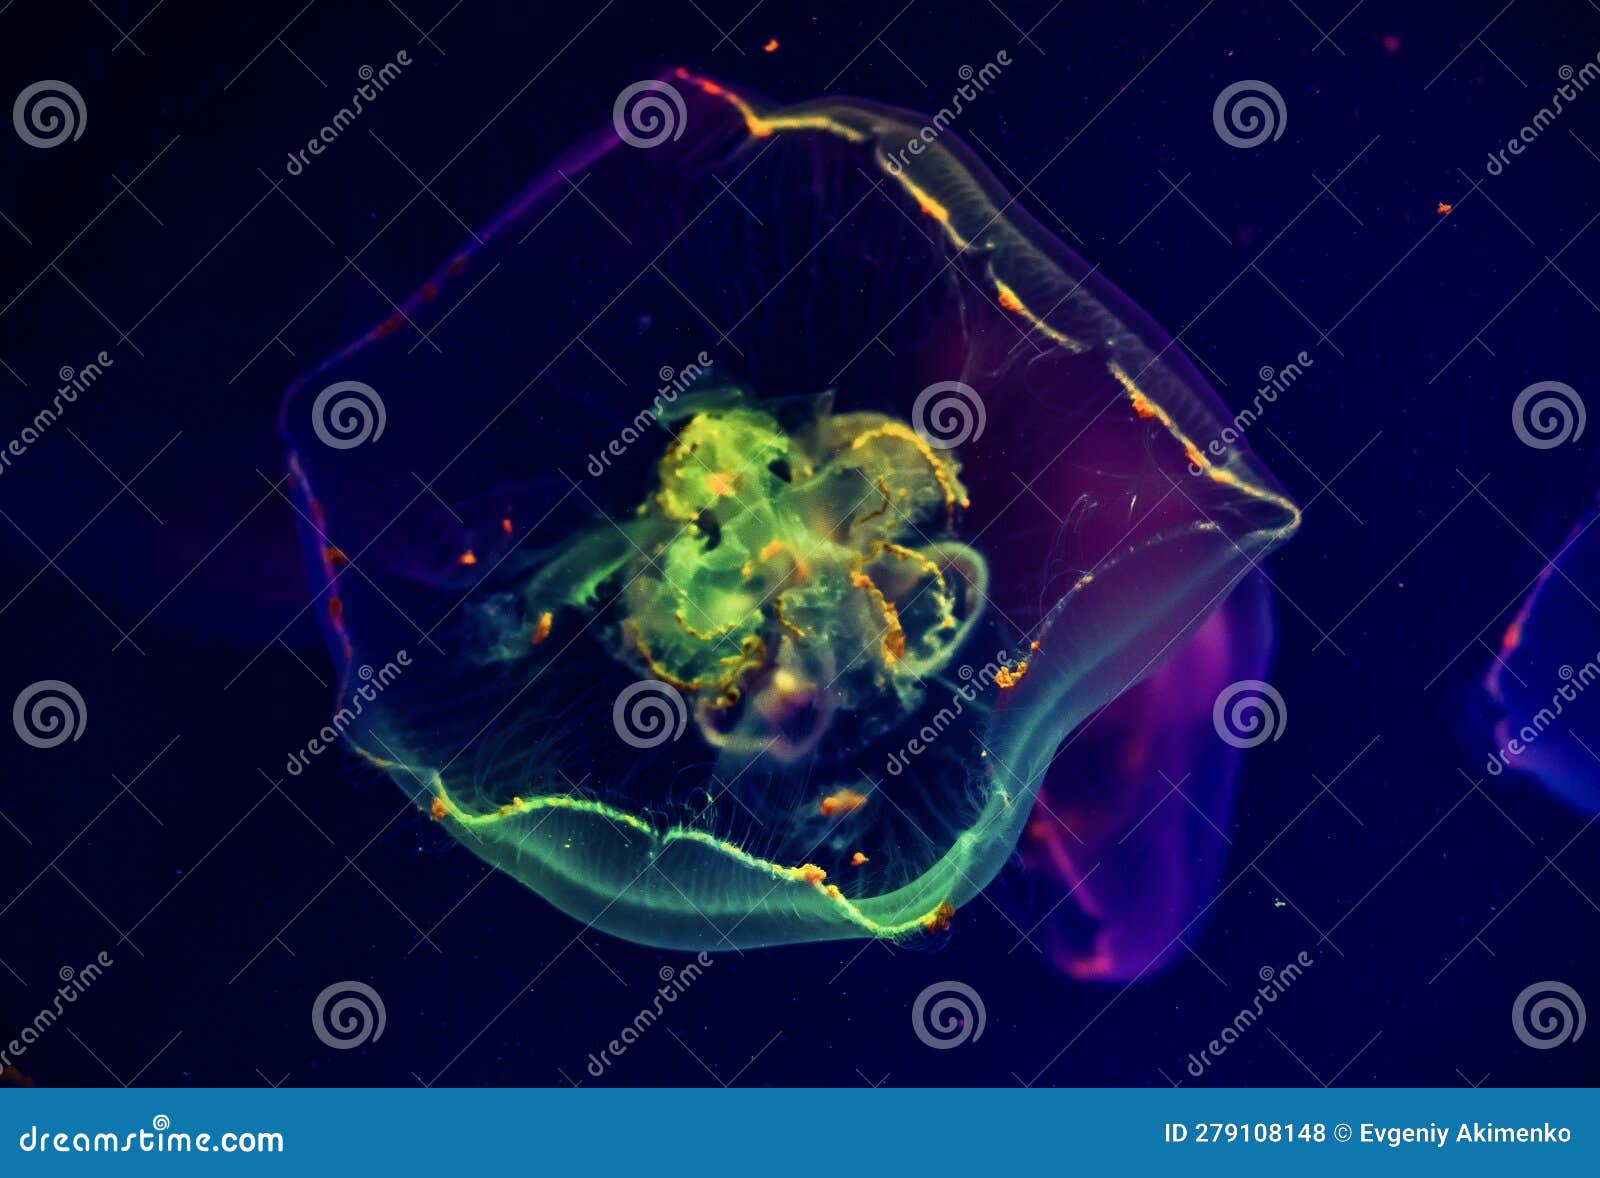 Moon Jellyfish Illuminated in the Aquarium Close-up Stock Photo - Image ...